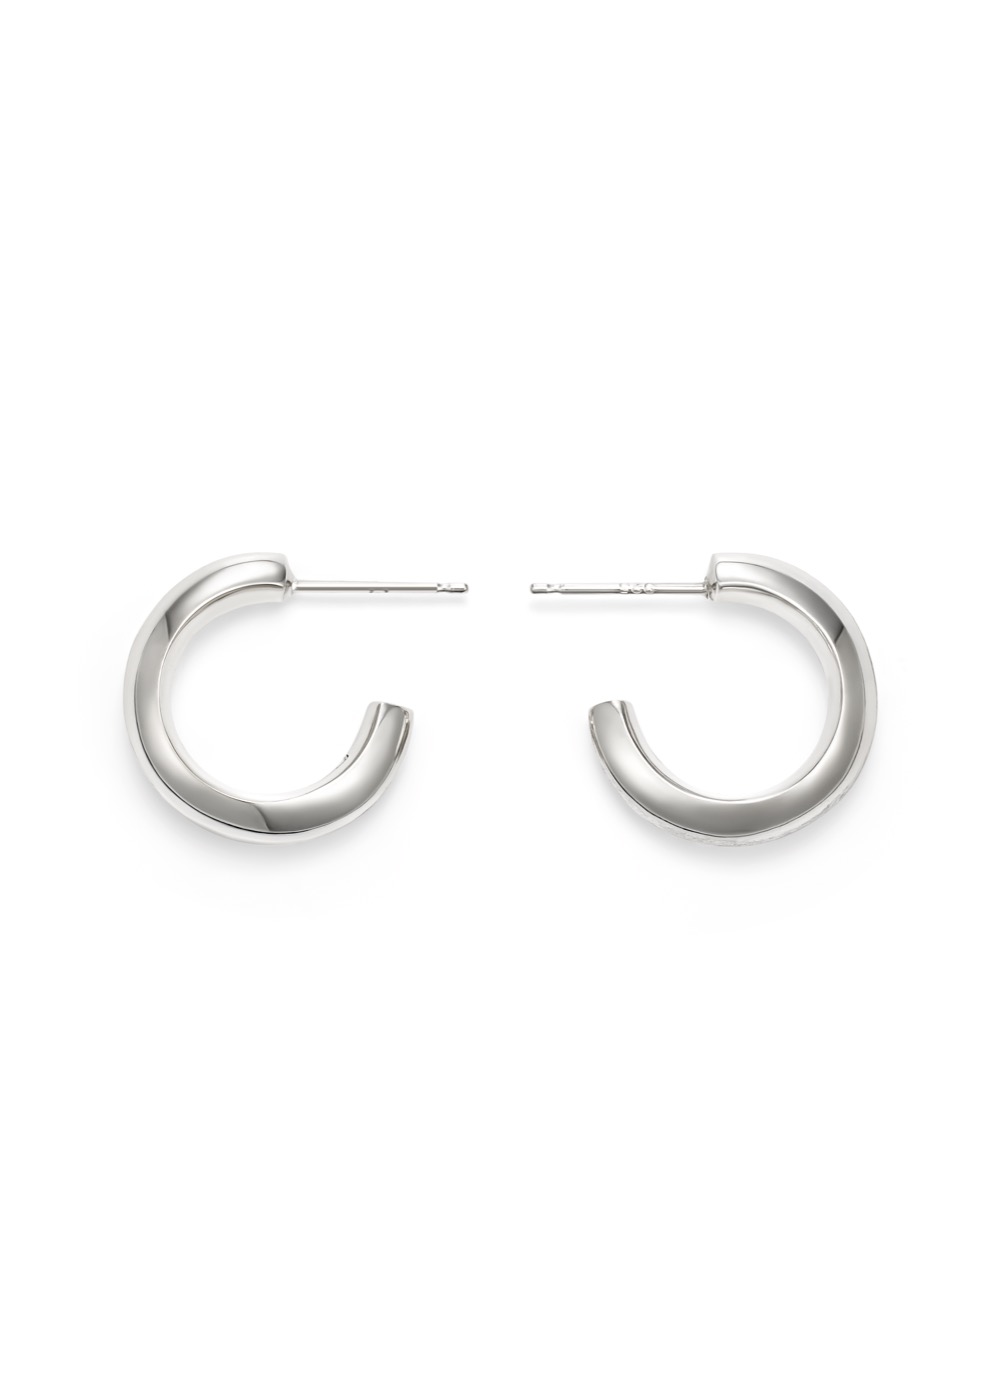 SADHER_phase2 earrings